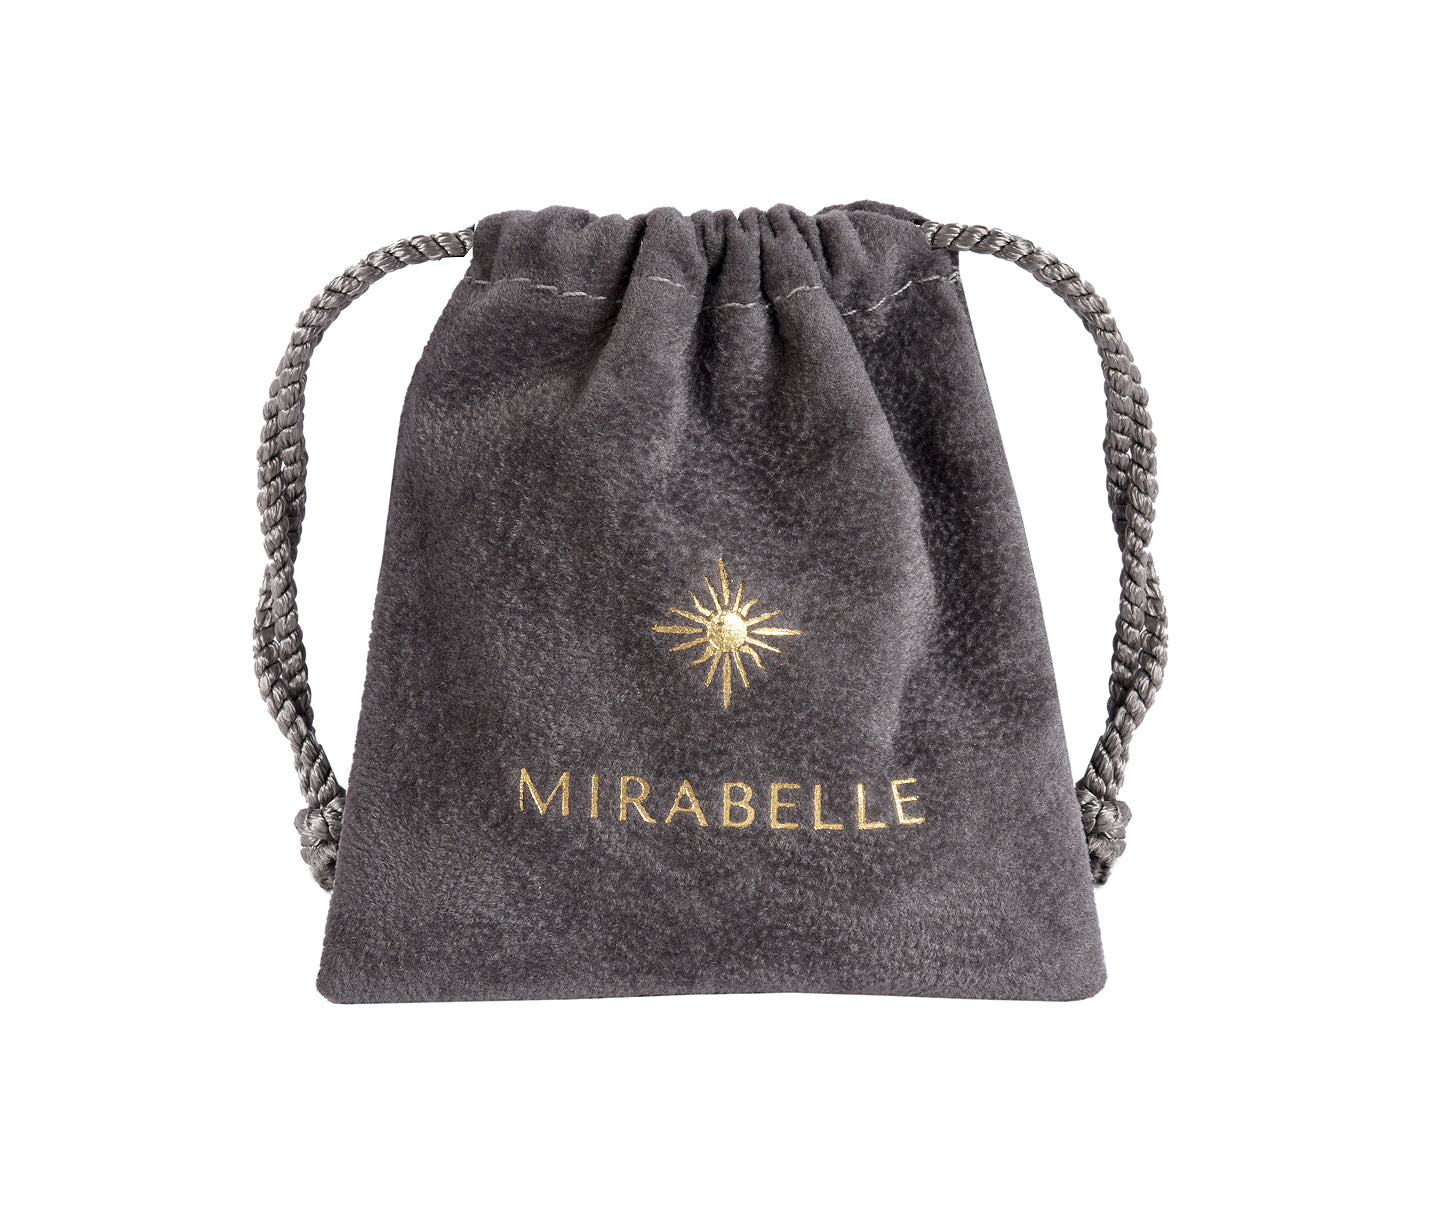 Hexagon Earrings - Mirabelle Jewellery